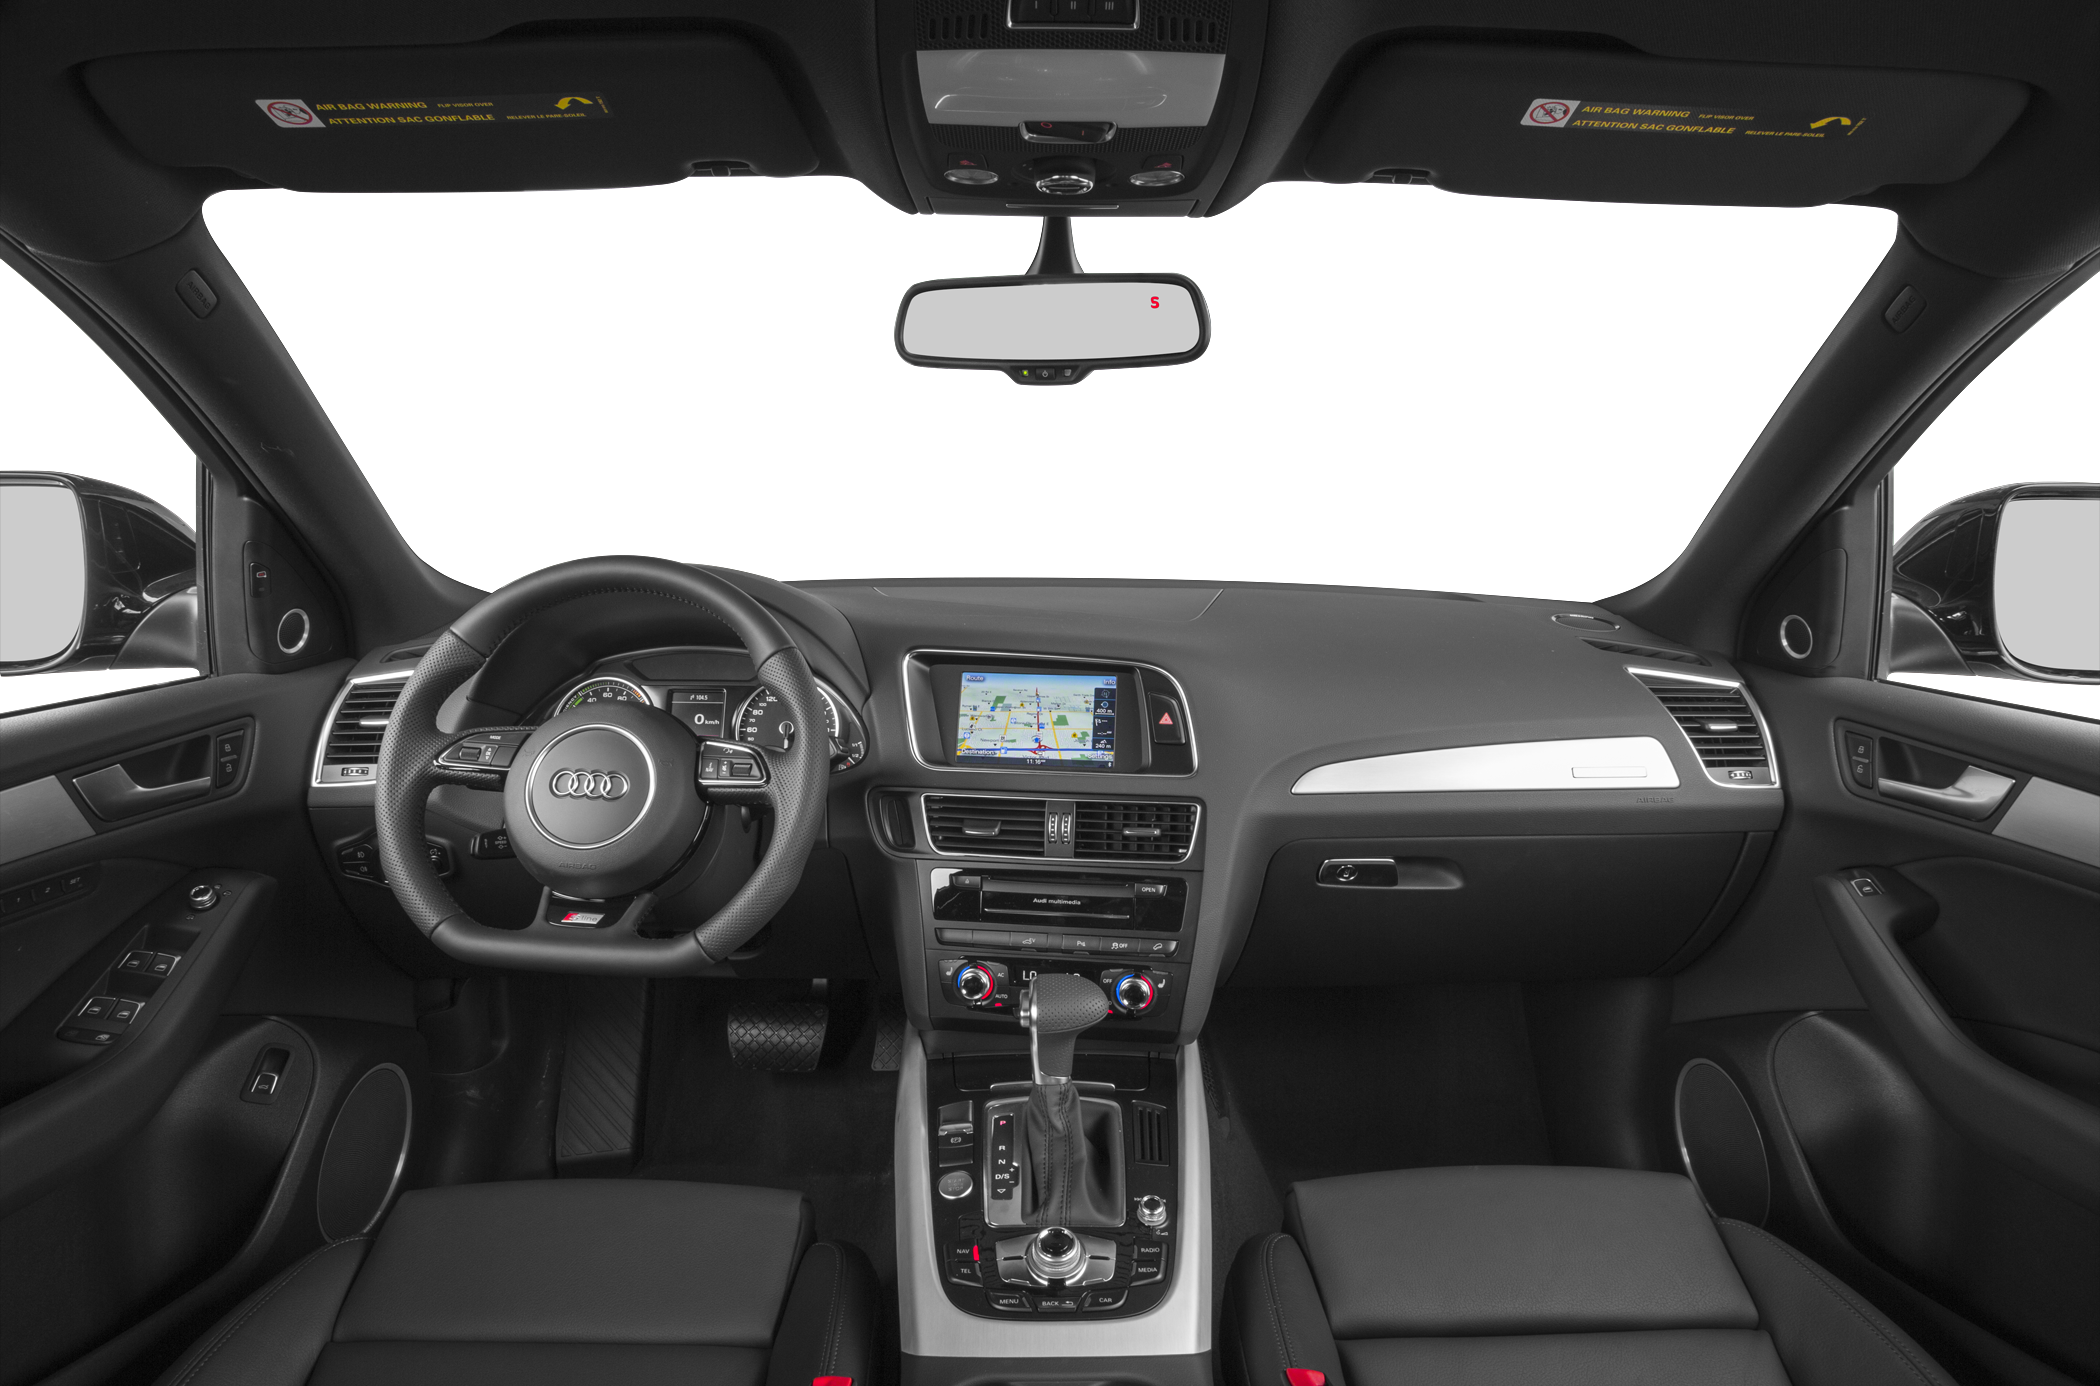 2015 Audi Q5 hybrid